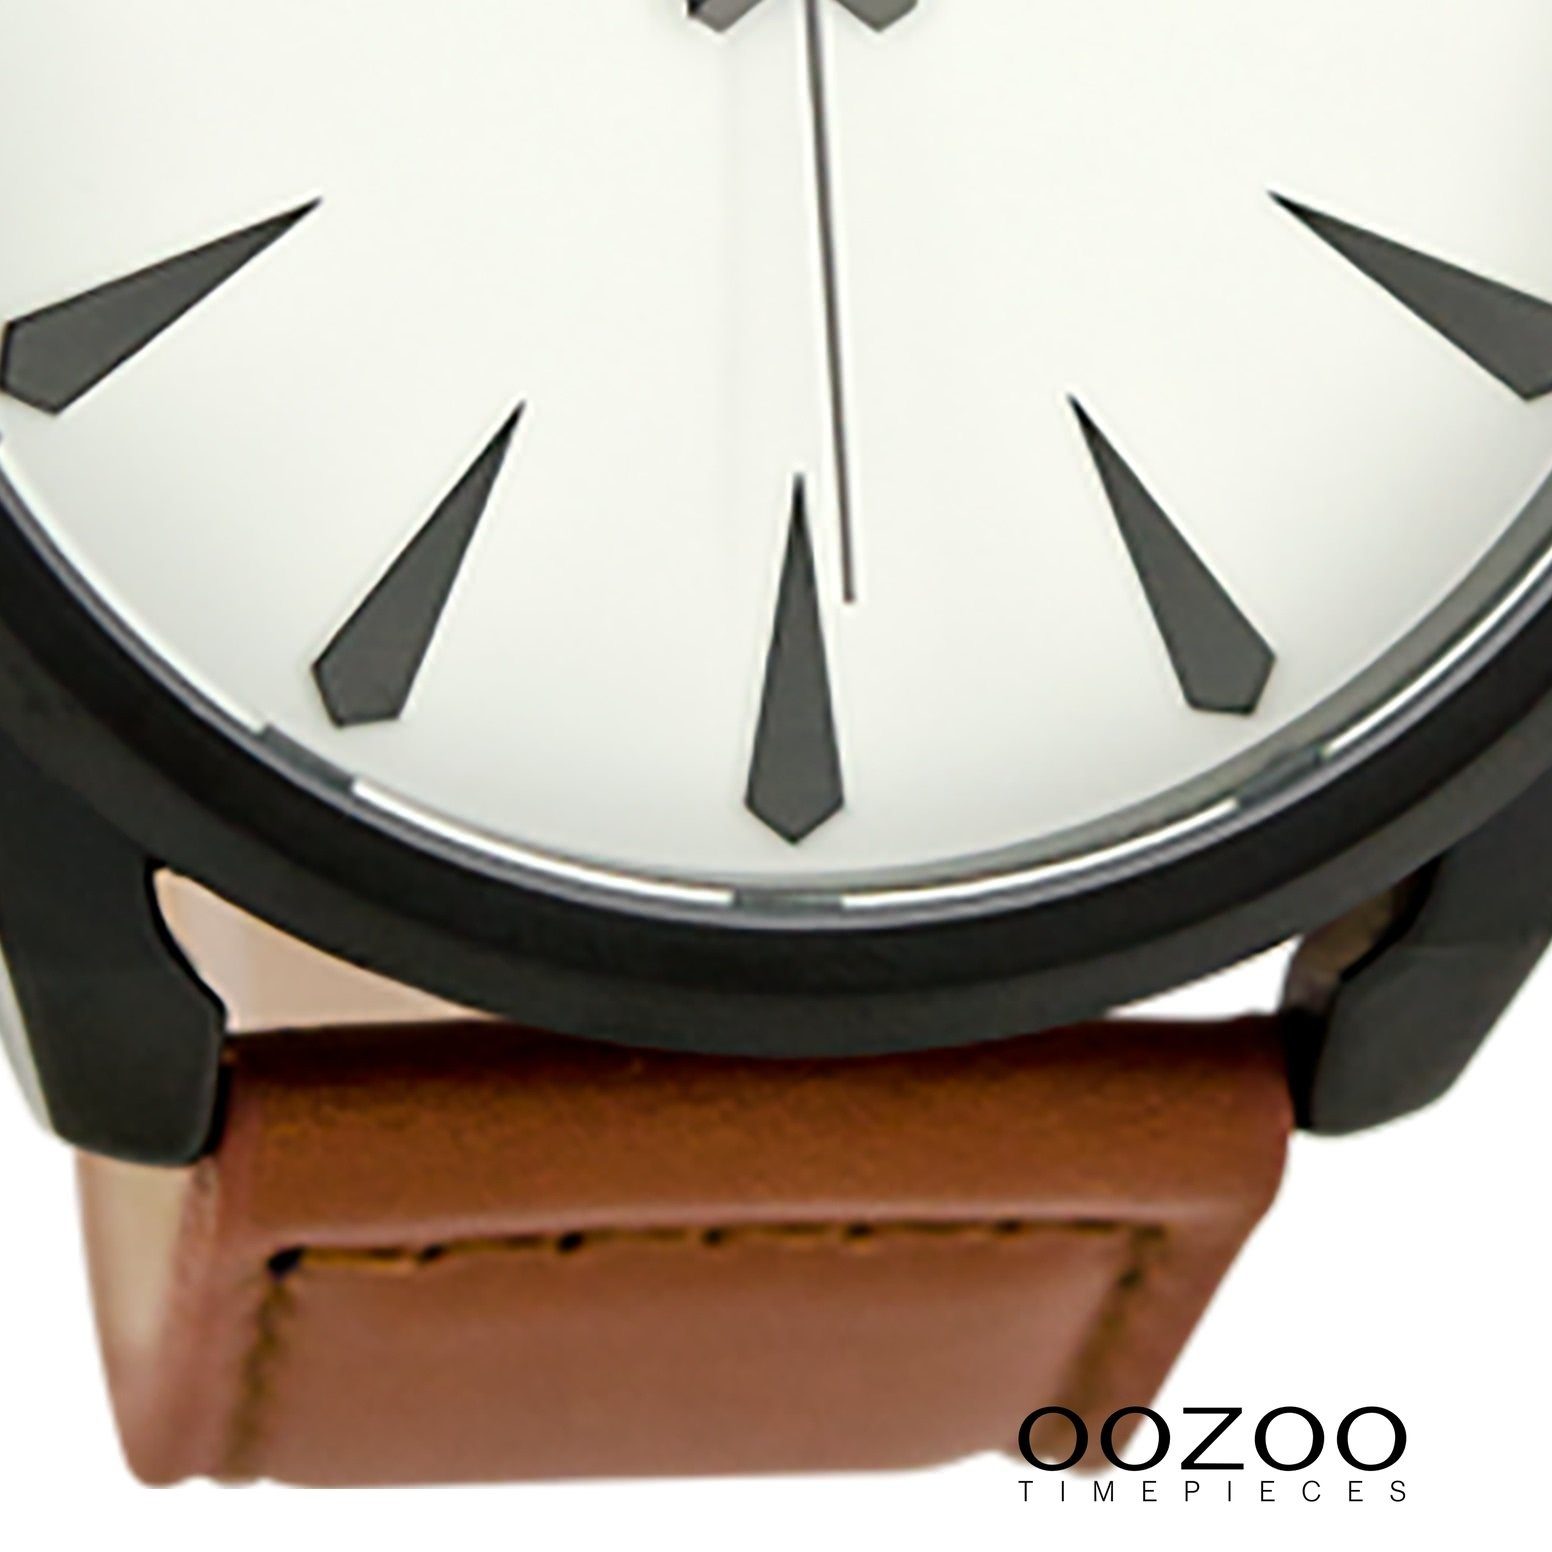 OOZOO Quarzuhr Oozoo Herren Armbanduhr Lederarmband, Herrenuhr (ca. Fashion-Style groß extra rund, braun, 48mm)